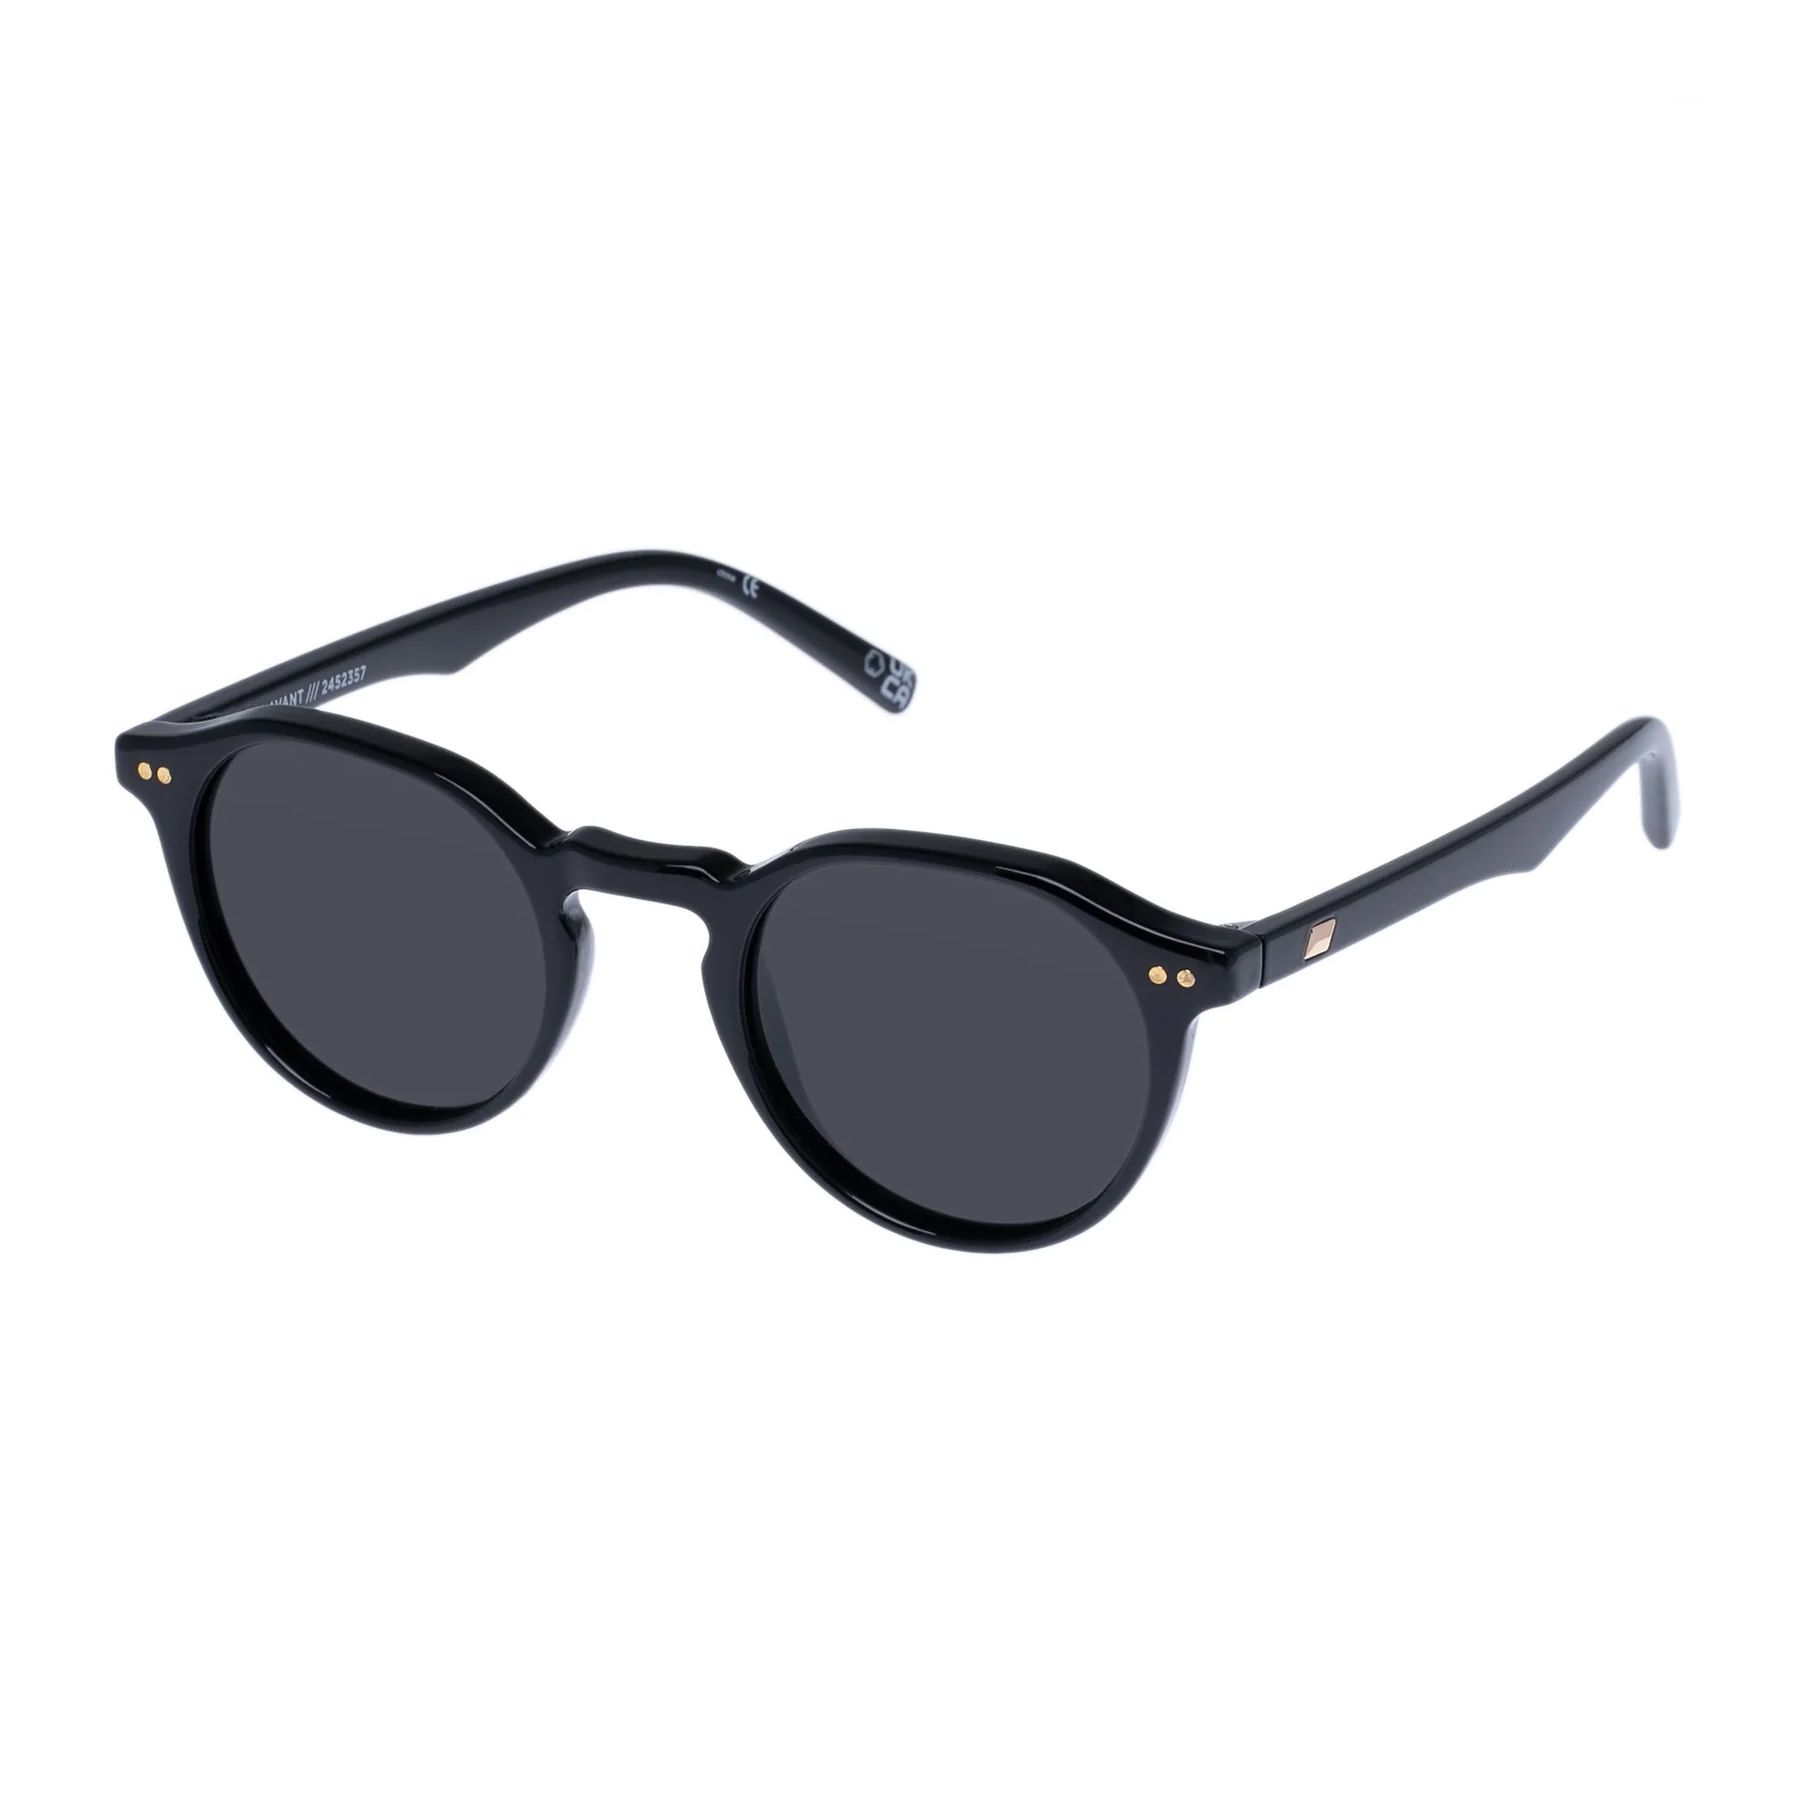 GALAVANT Round Sunglasses BLACK - size 48